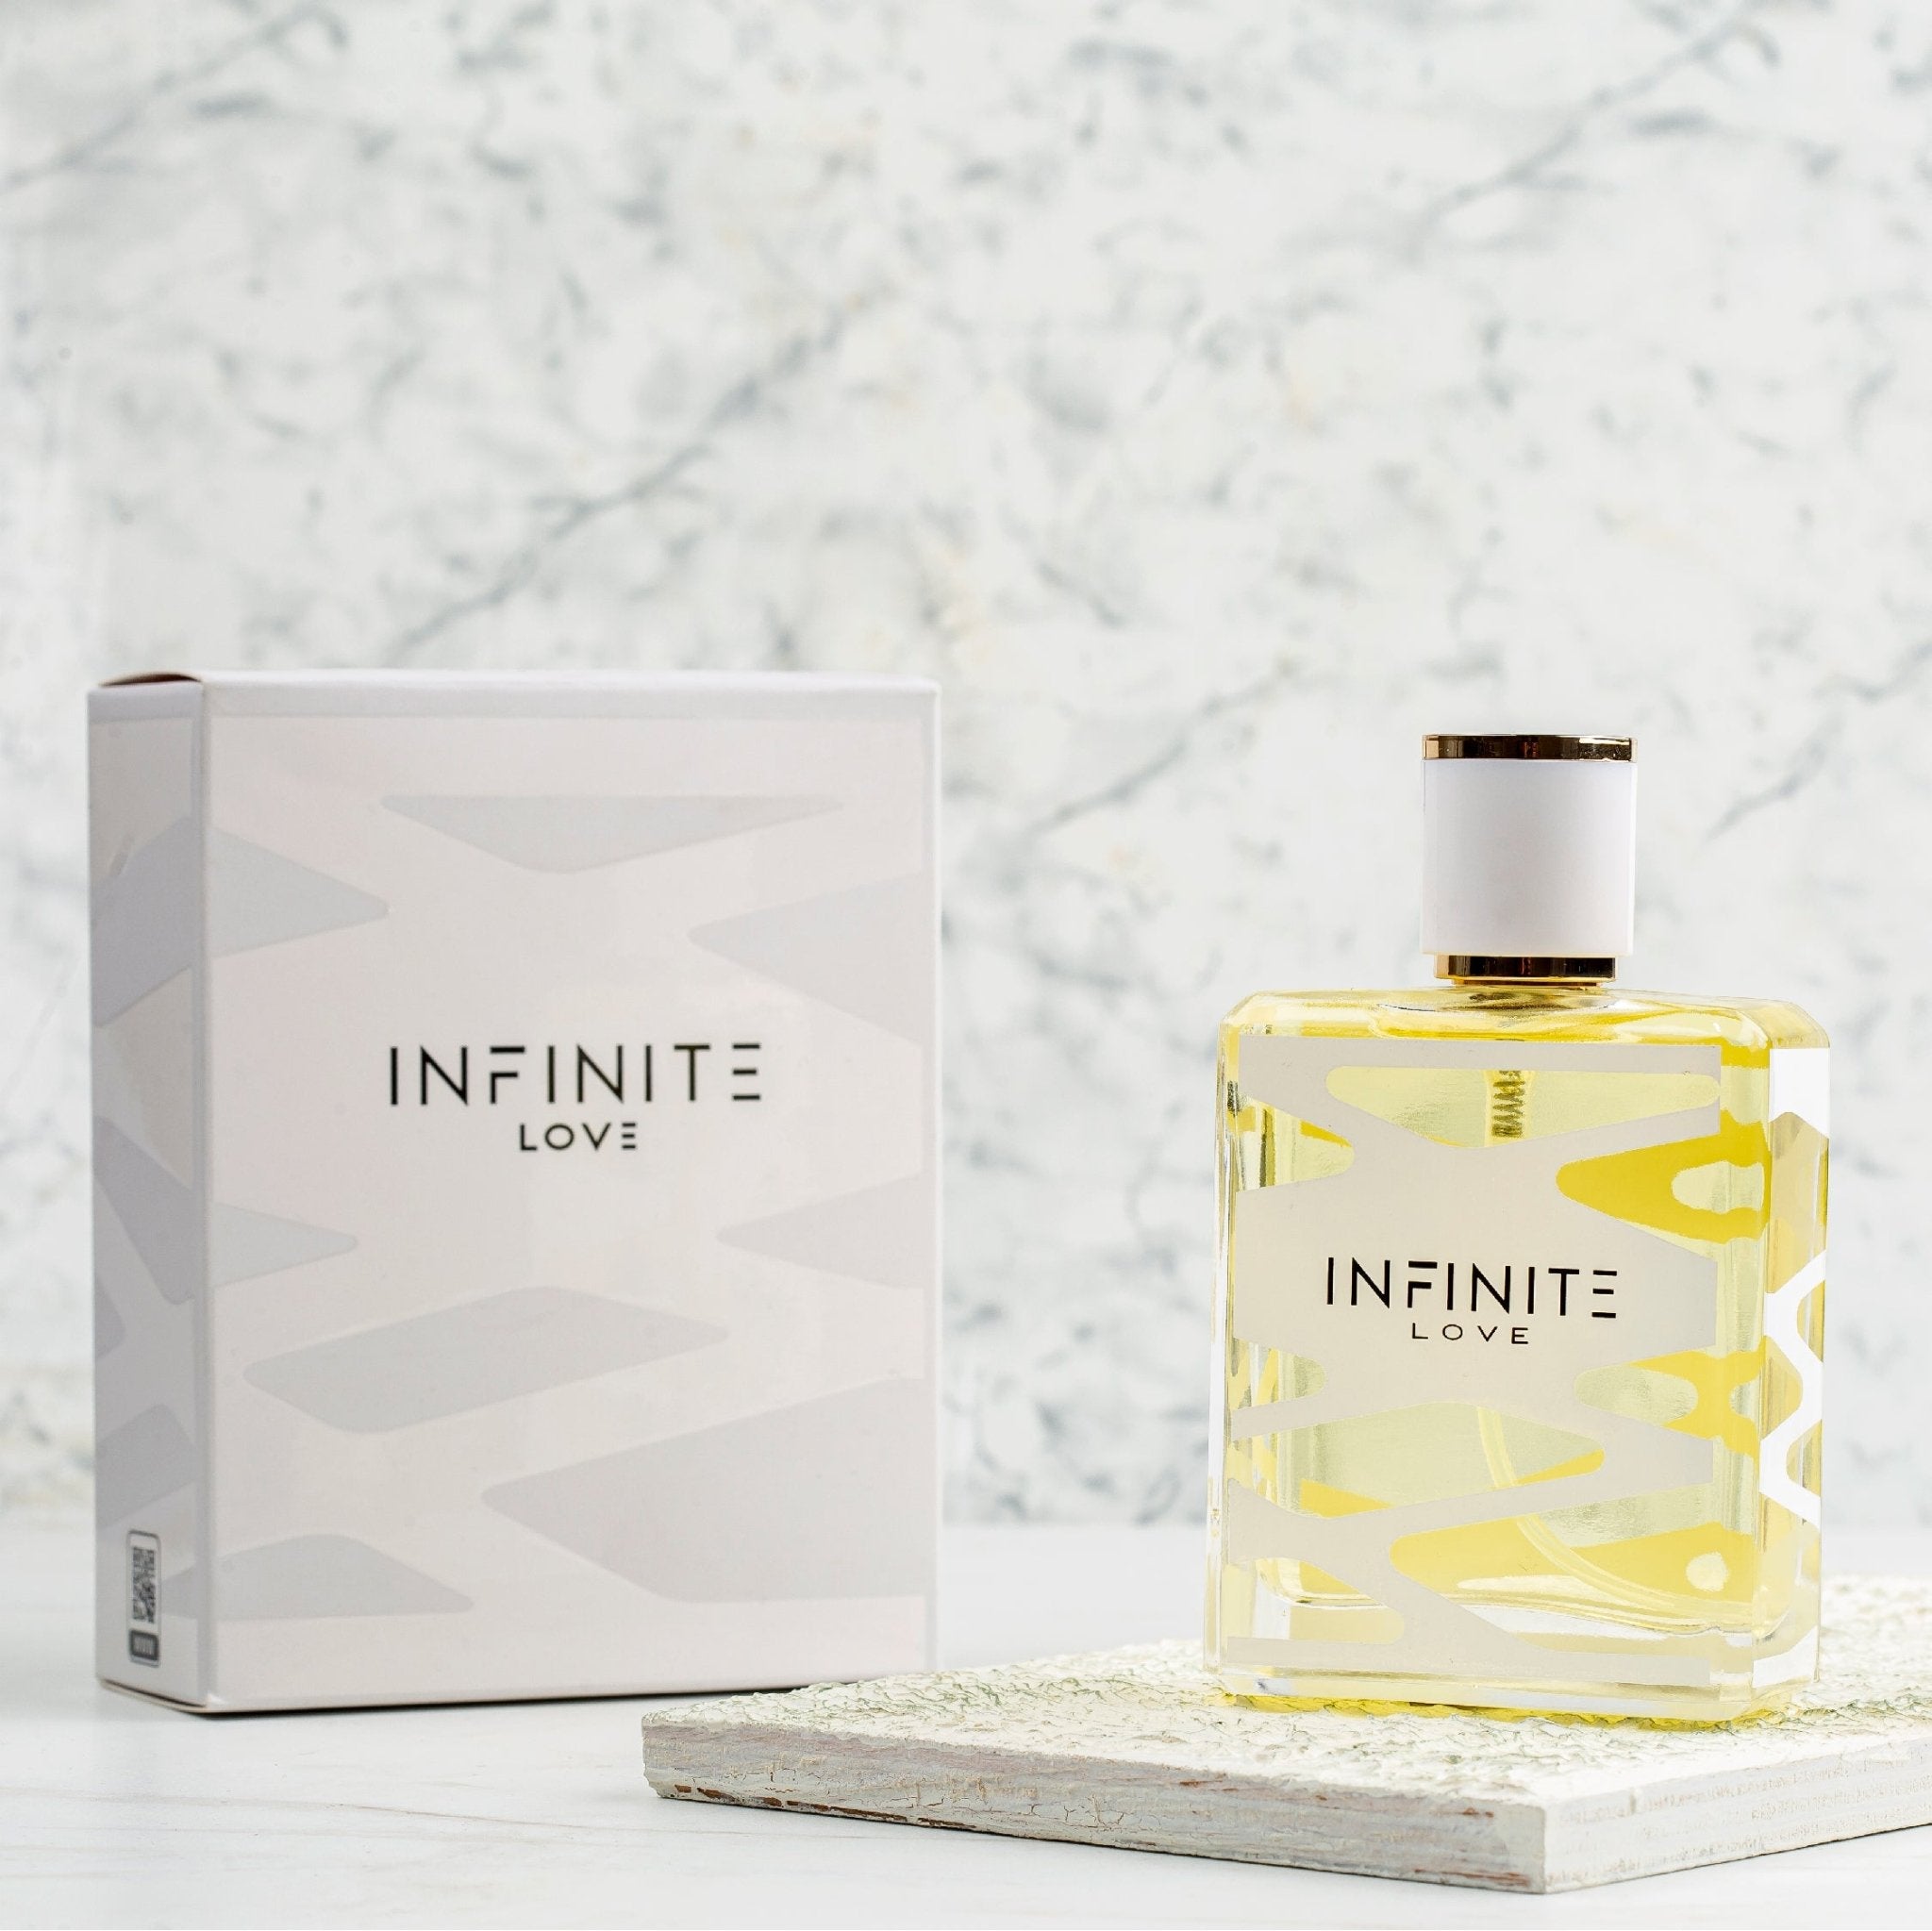 K131 - Inspired by Chance Eau Tendre - Infinite Love Perfume